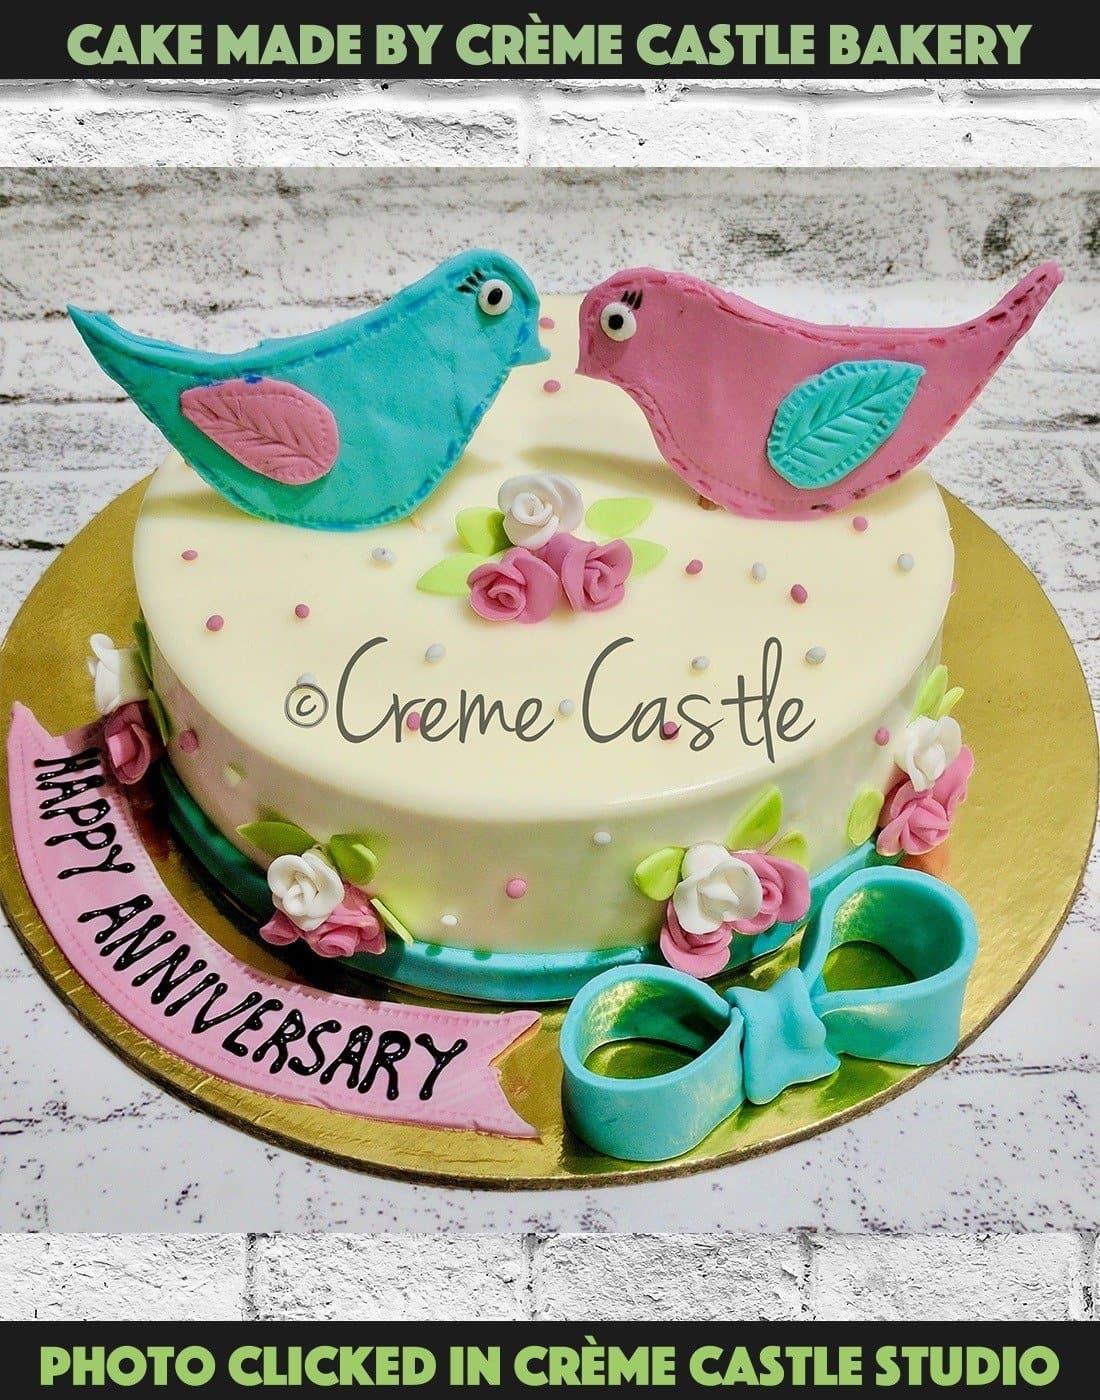 Bird love floral cake - Creme Castle